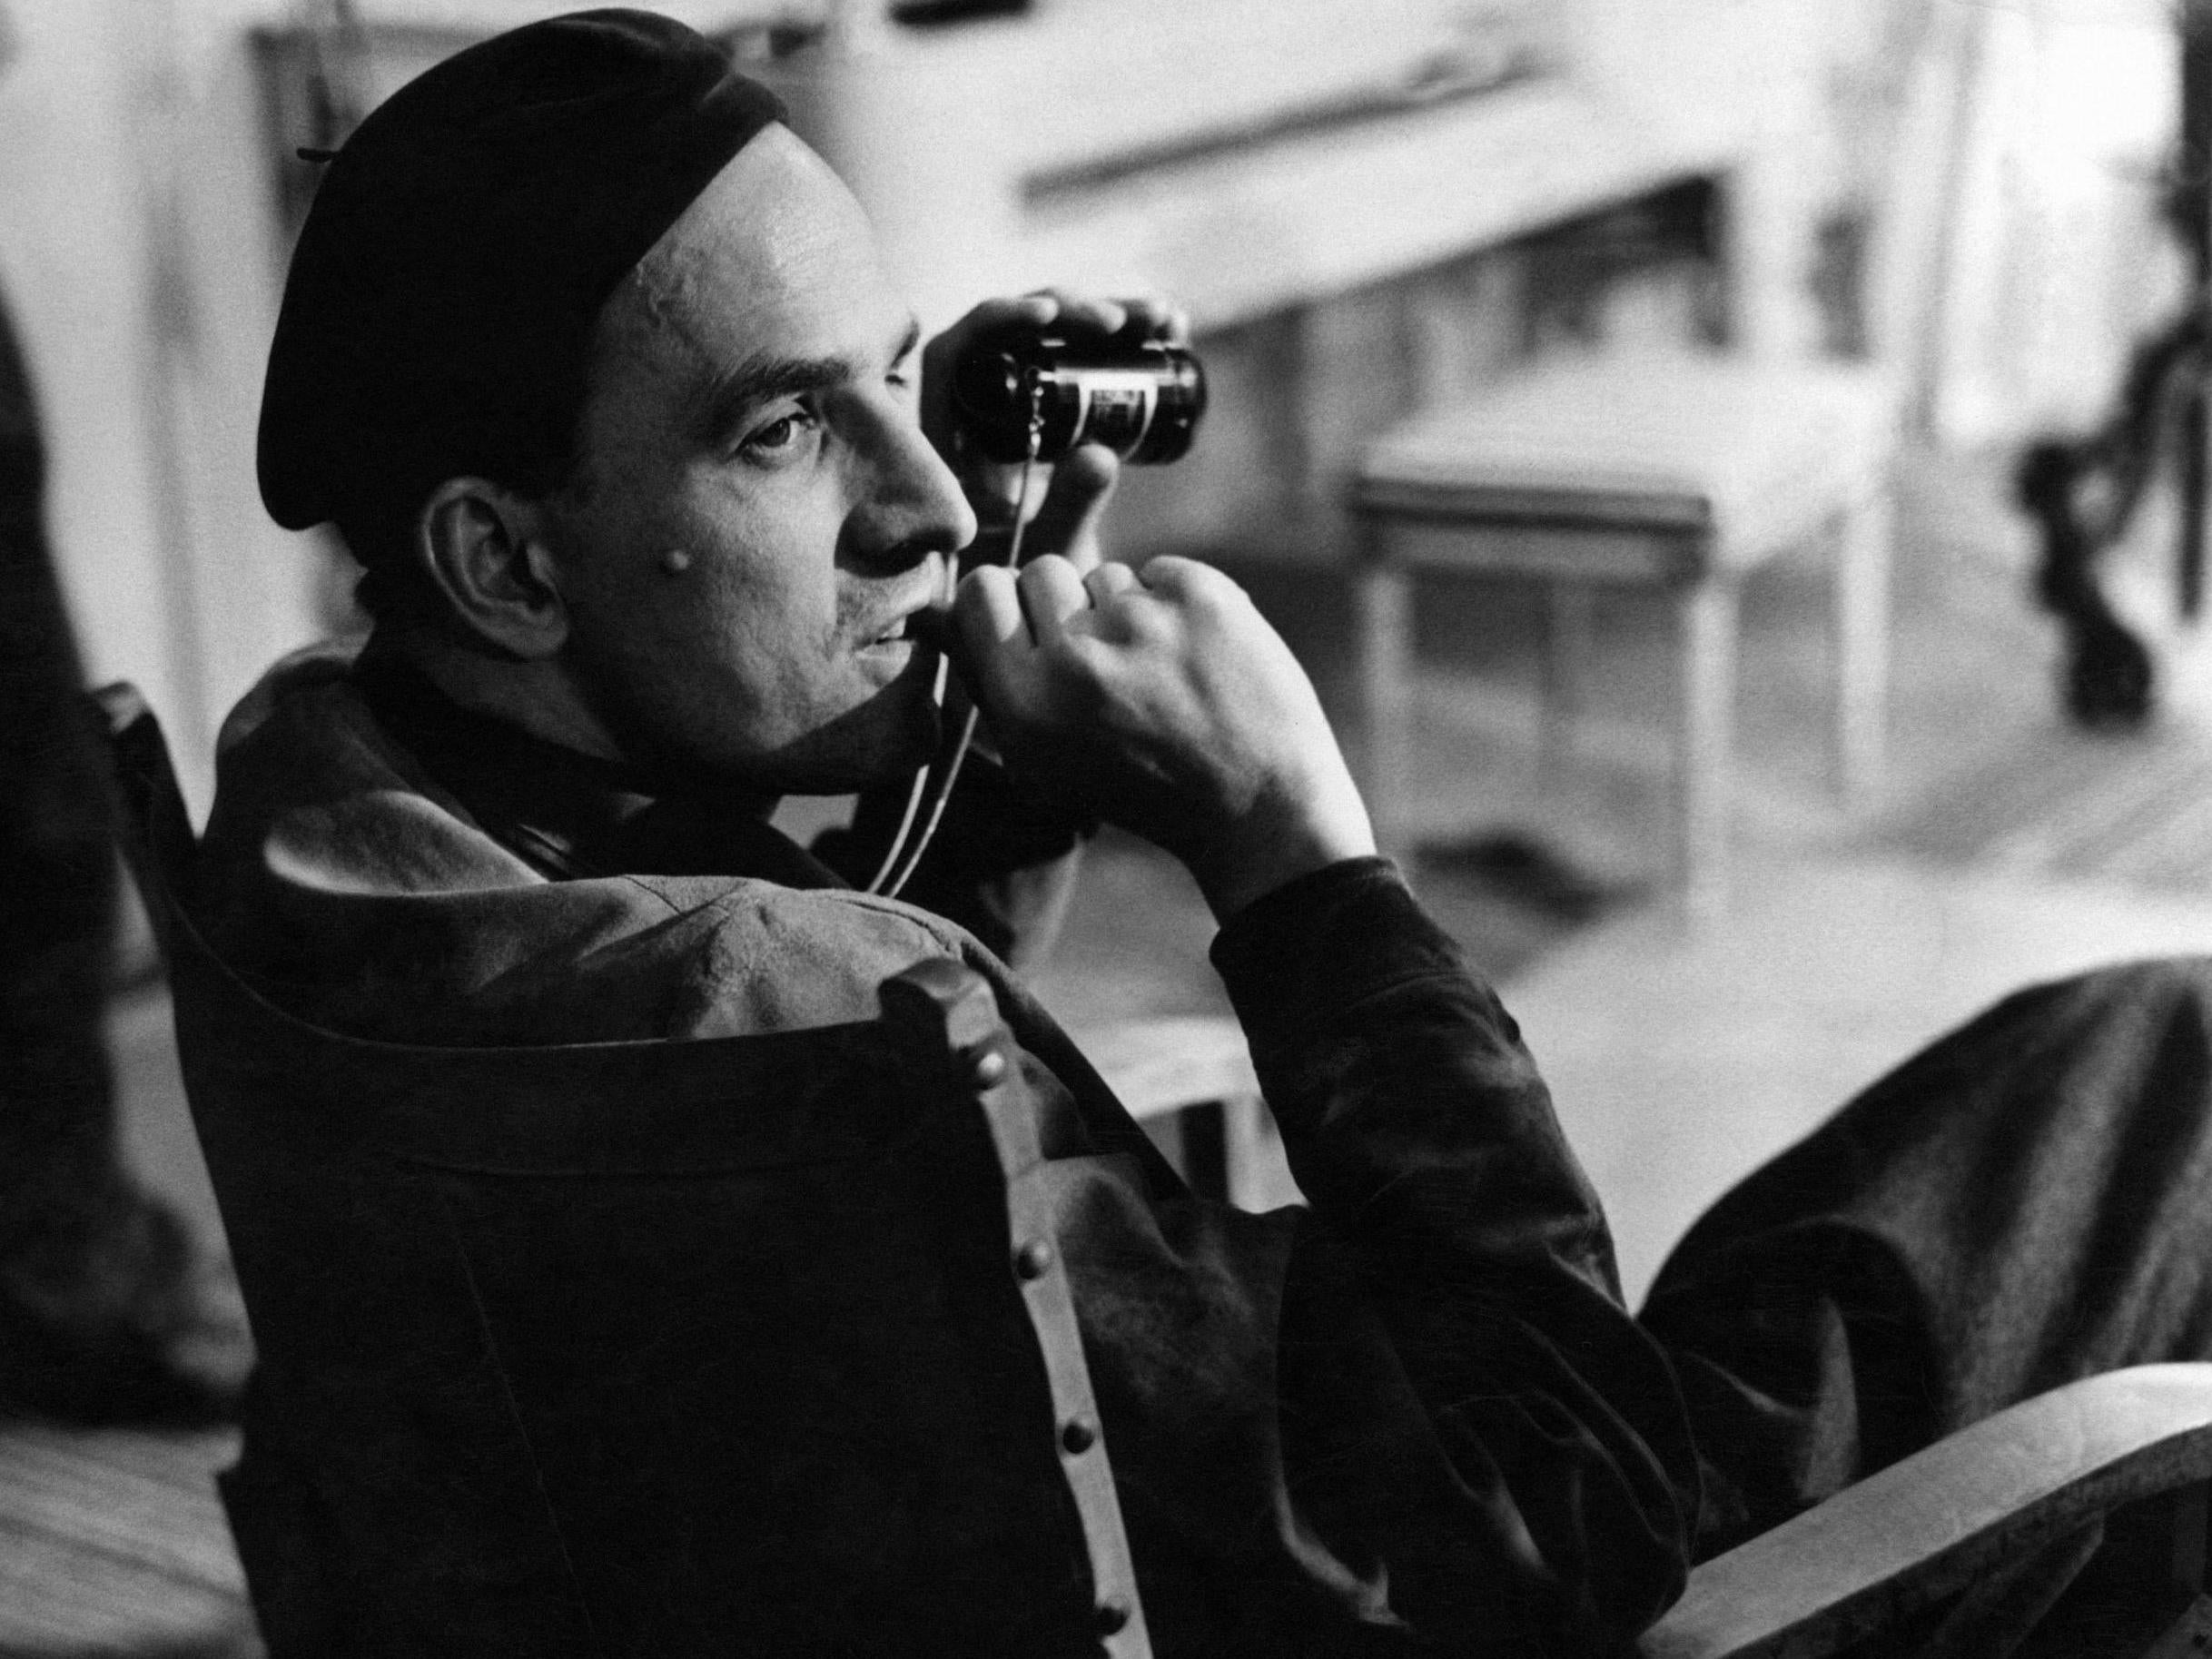 Ingmar Bergman on set in the 1960s